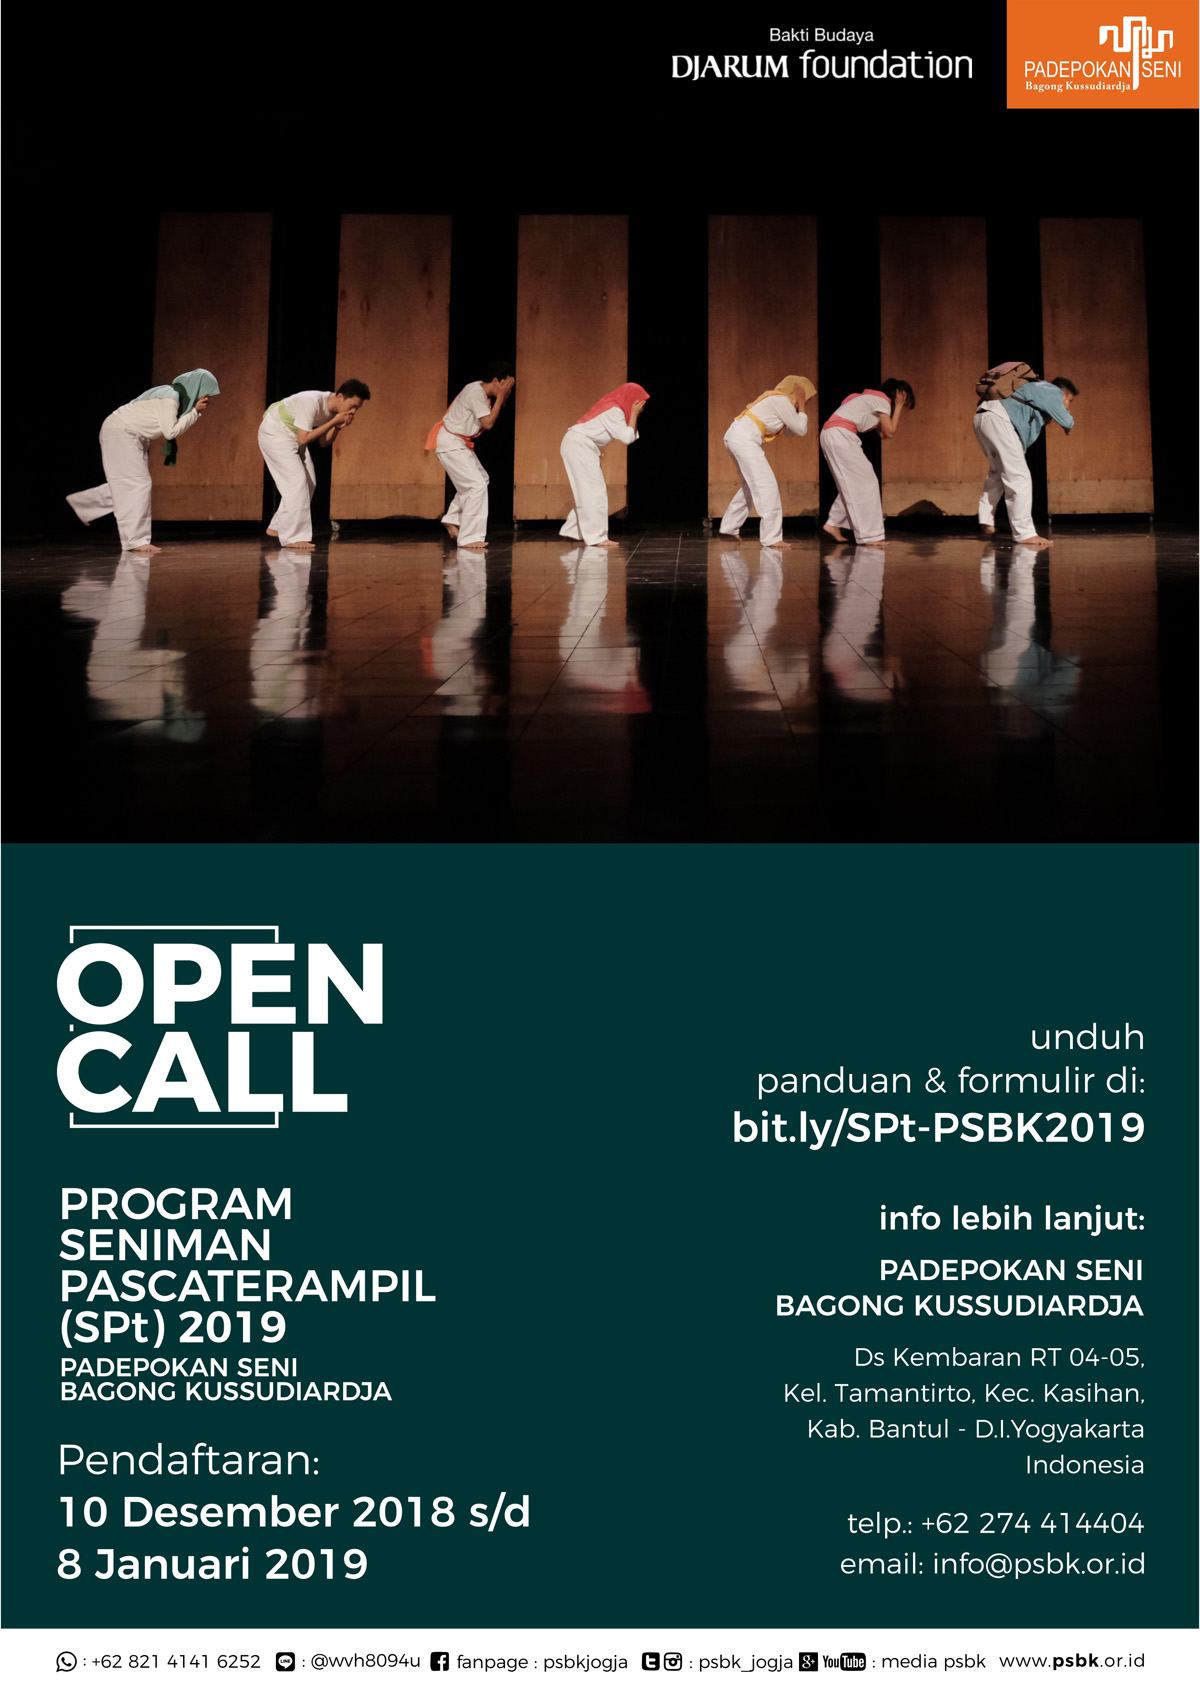 Psbk Open Call Program Seniman Pascaterampil 2019 Yogya